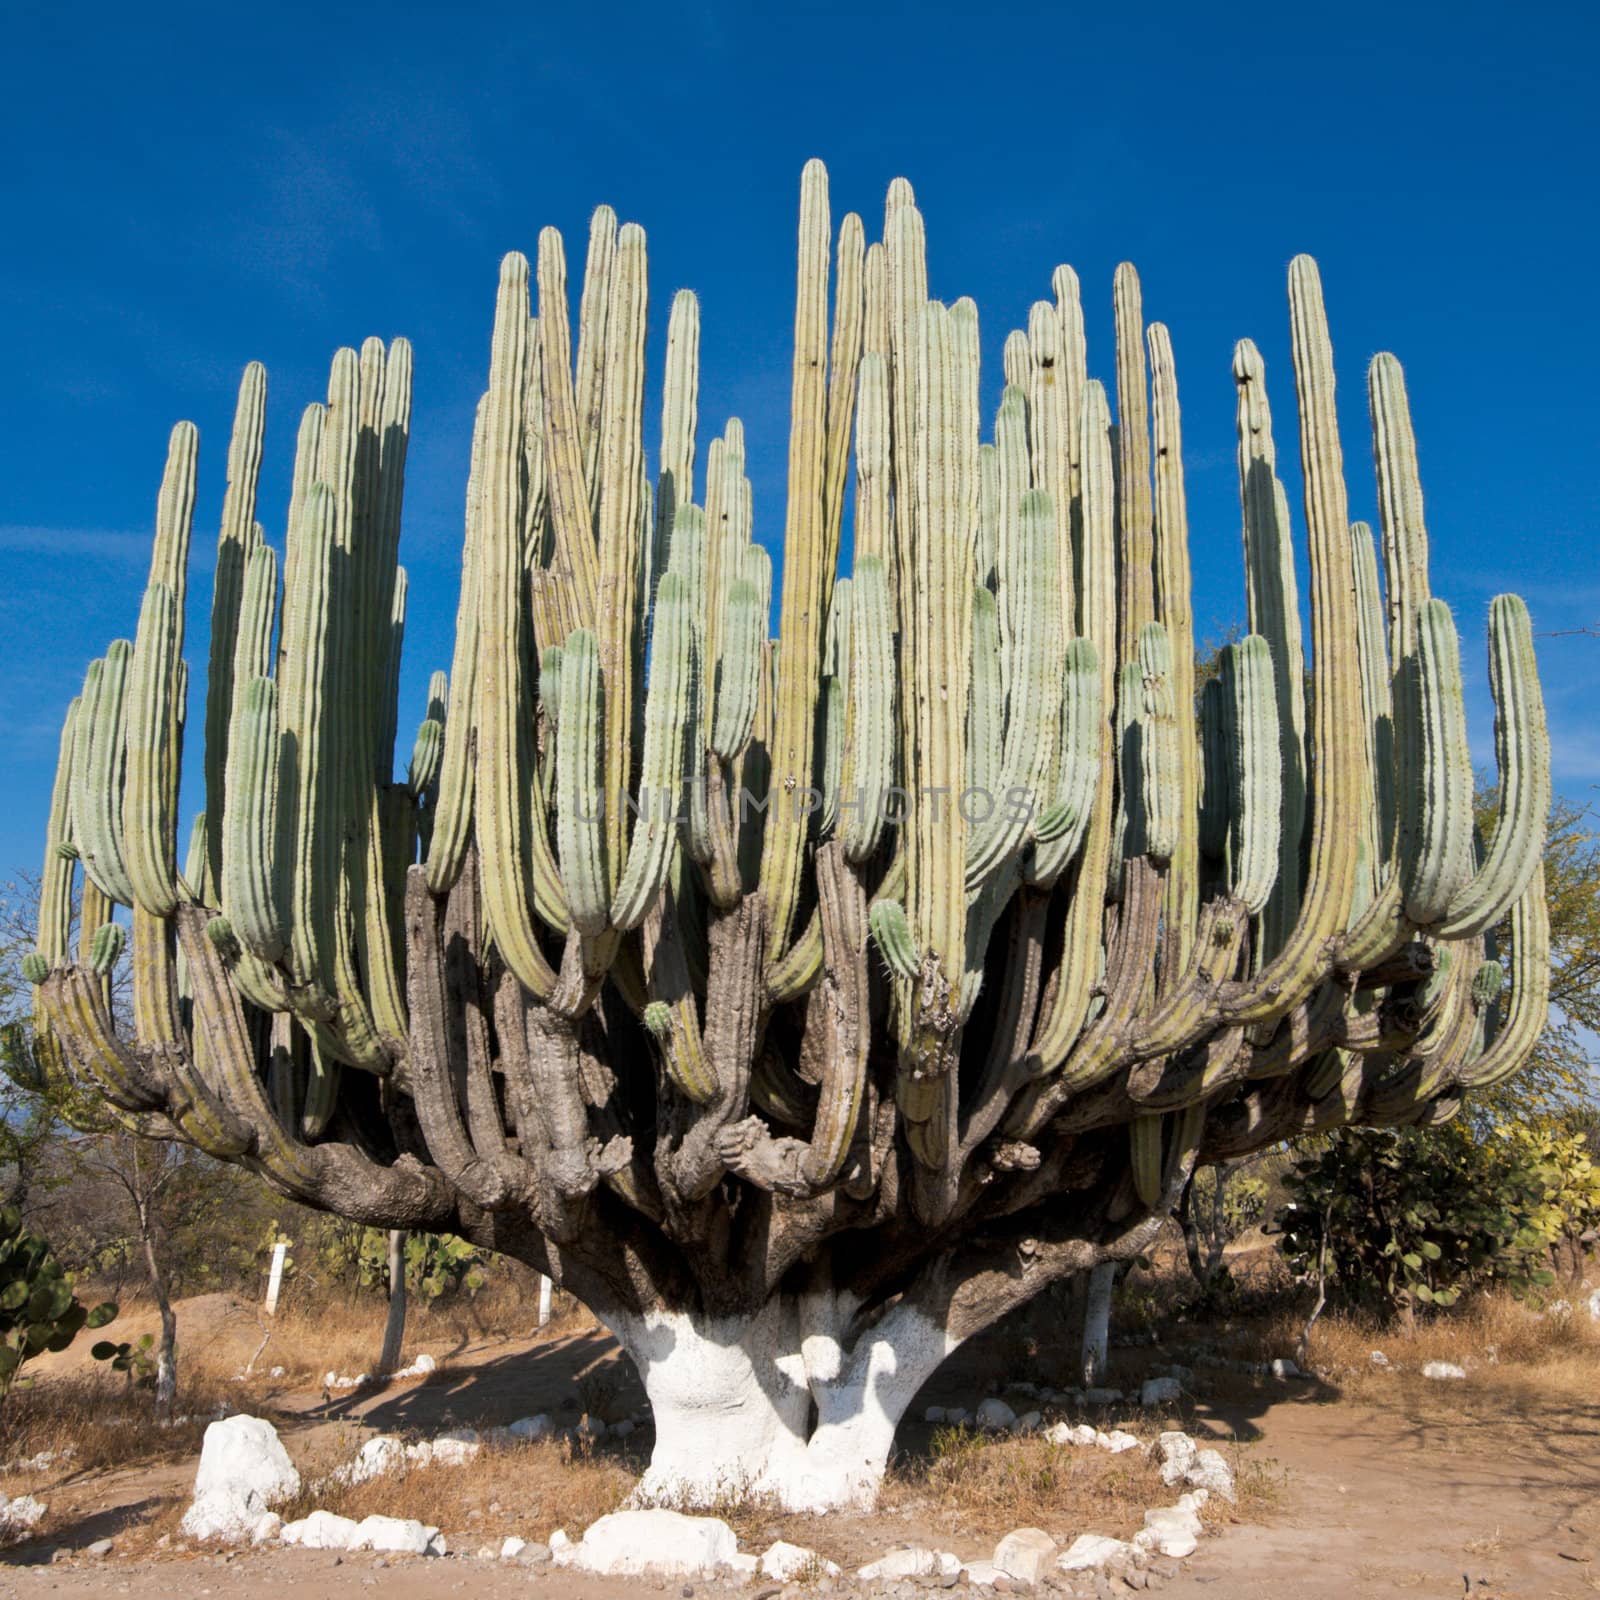 Giant cactus in Mexico